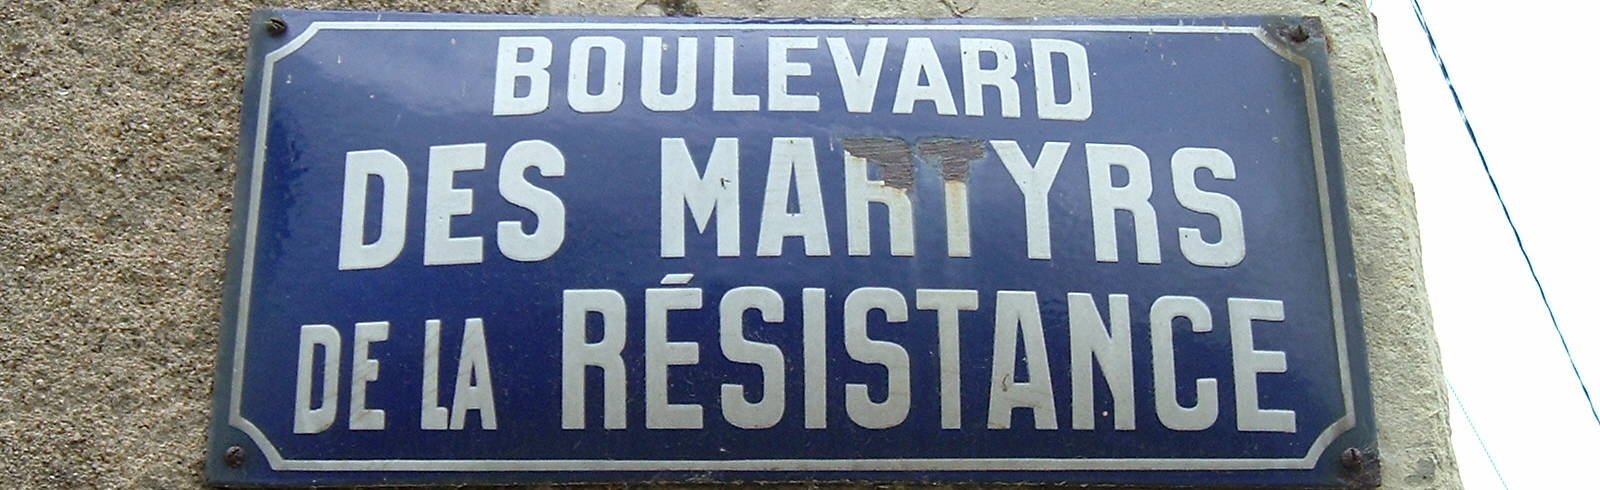 Street sign marking the Boulevard des Martyrs de la Résistance in Montreiul-Bailey in the western Loire Valley.